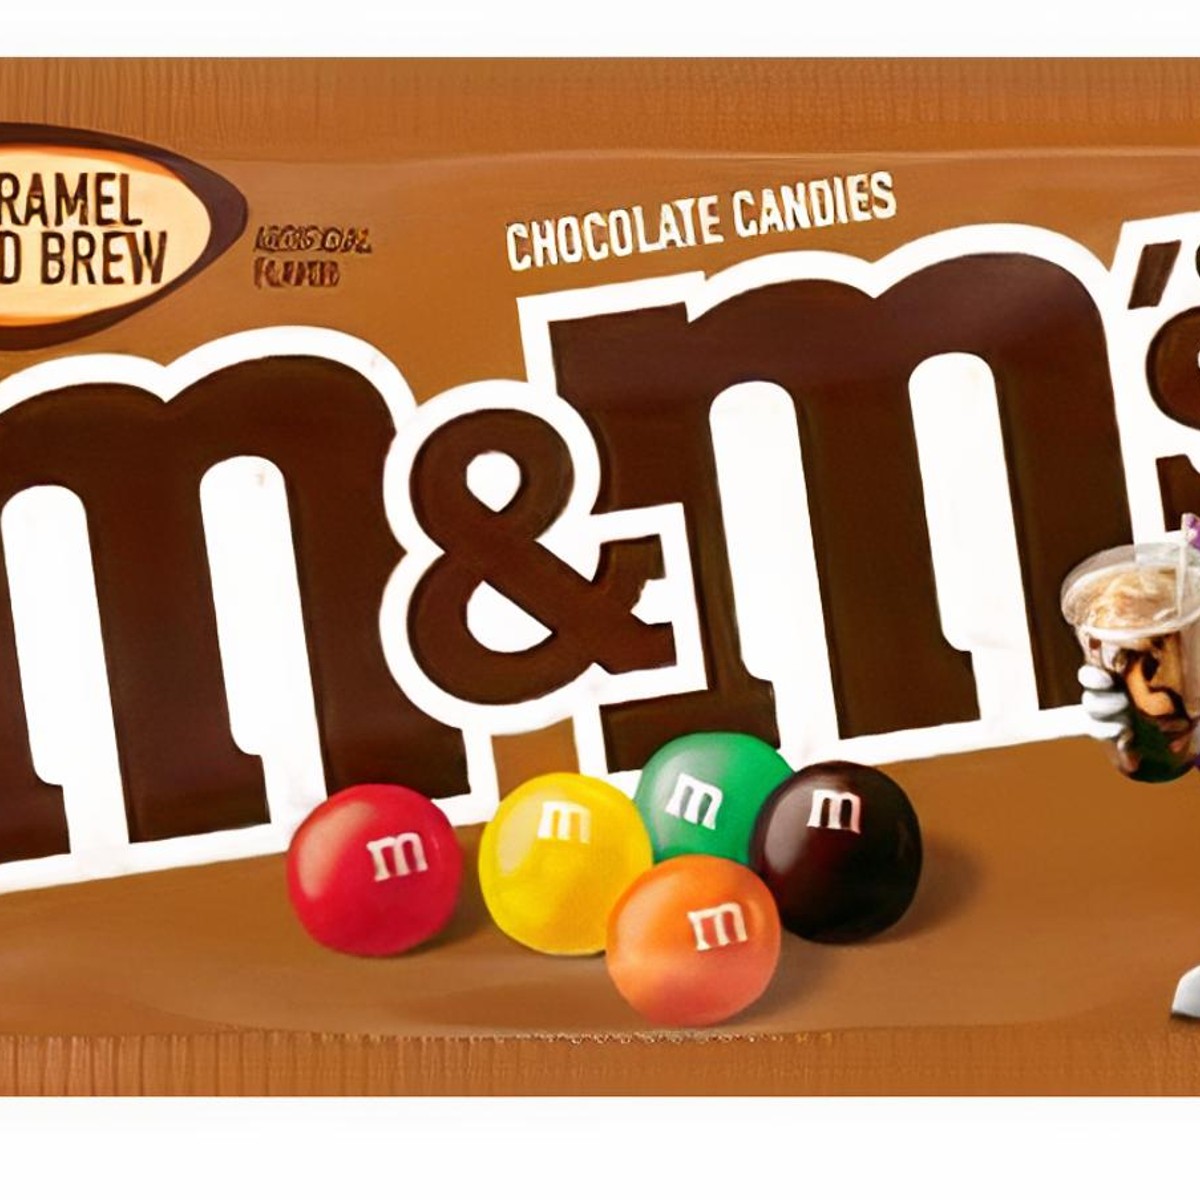 13.5G) M&M's CHOCOLATE FUN SIZE MINI Milk or Peanut Flavors - CHOCOLATE M&M